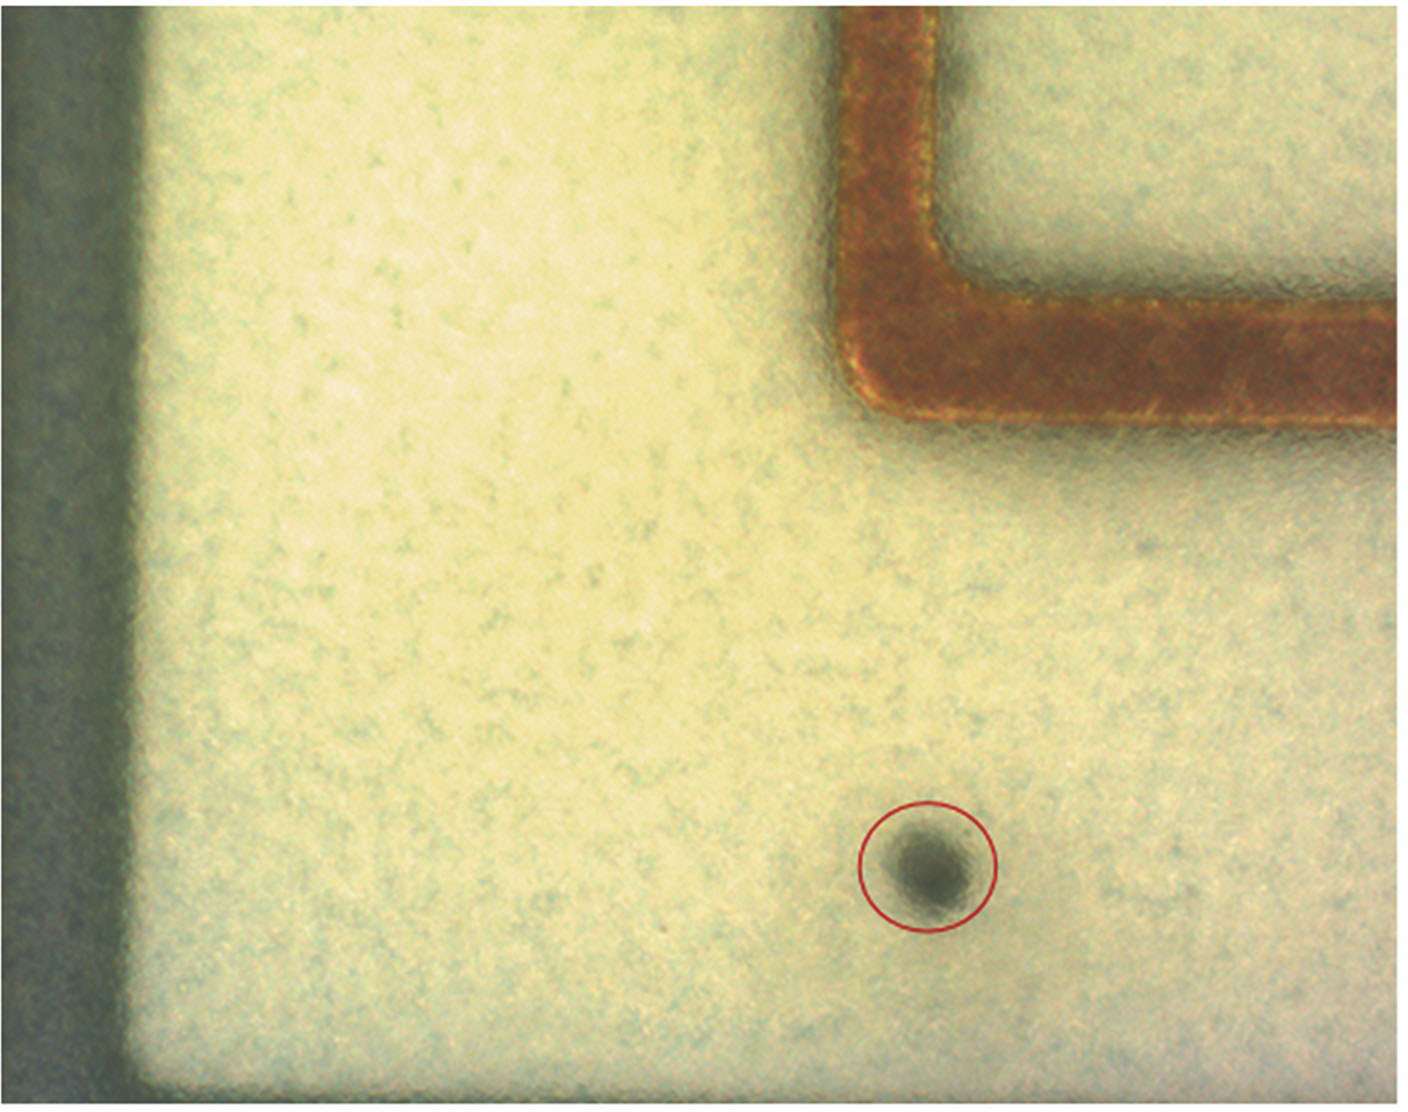 Optical micrograph of ESD black spot